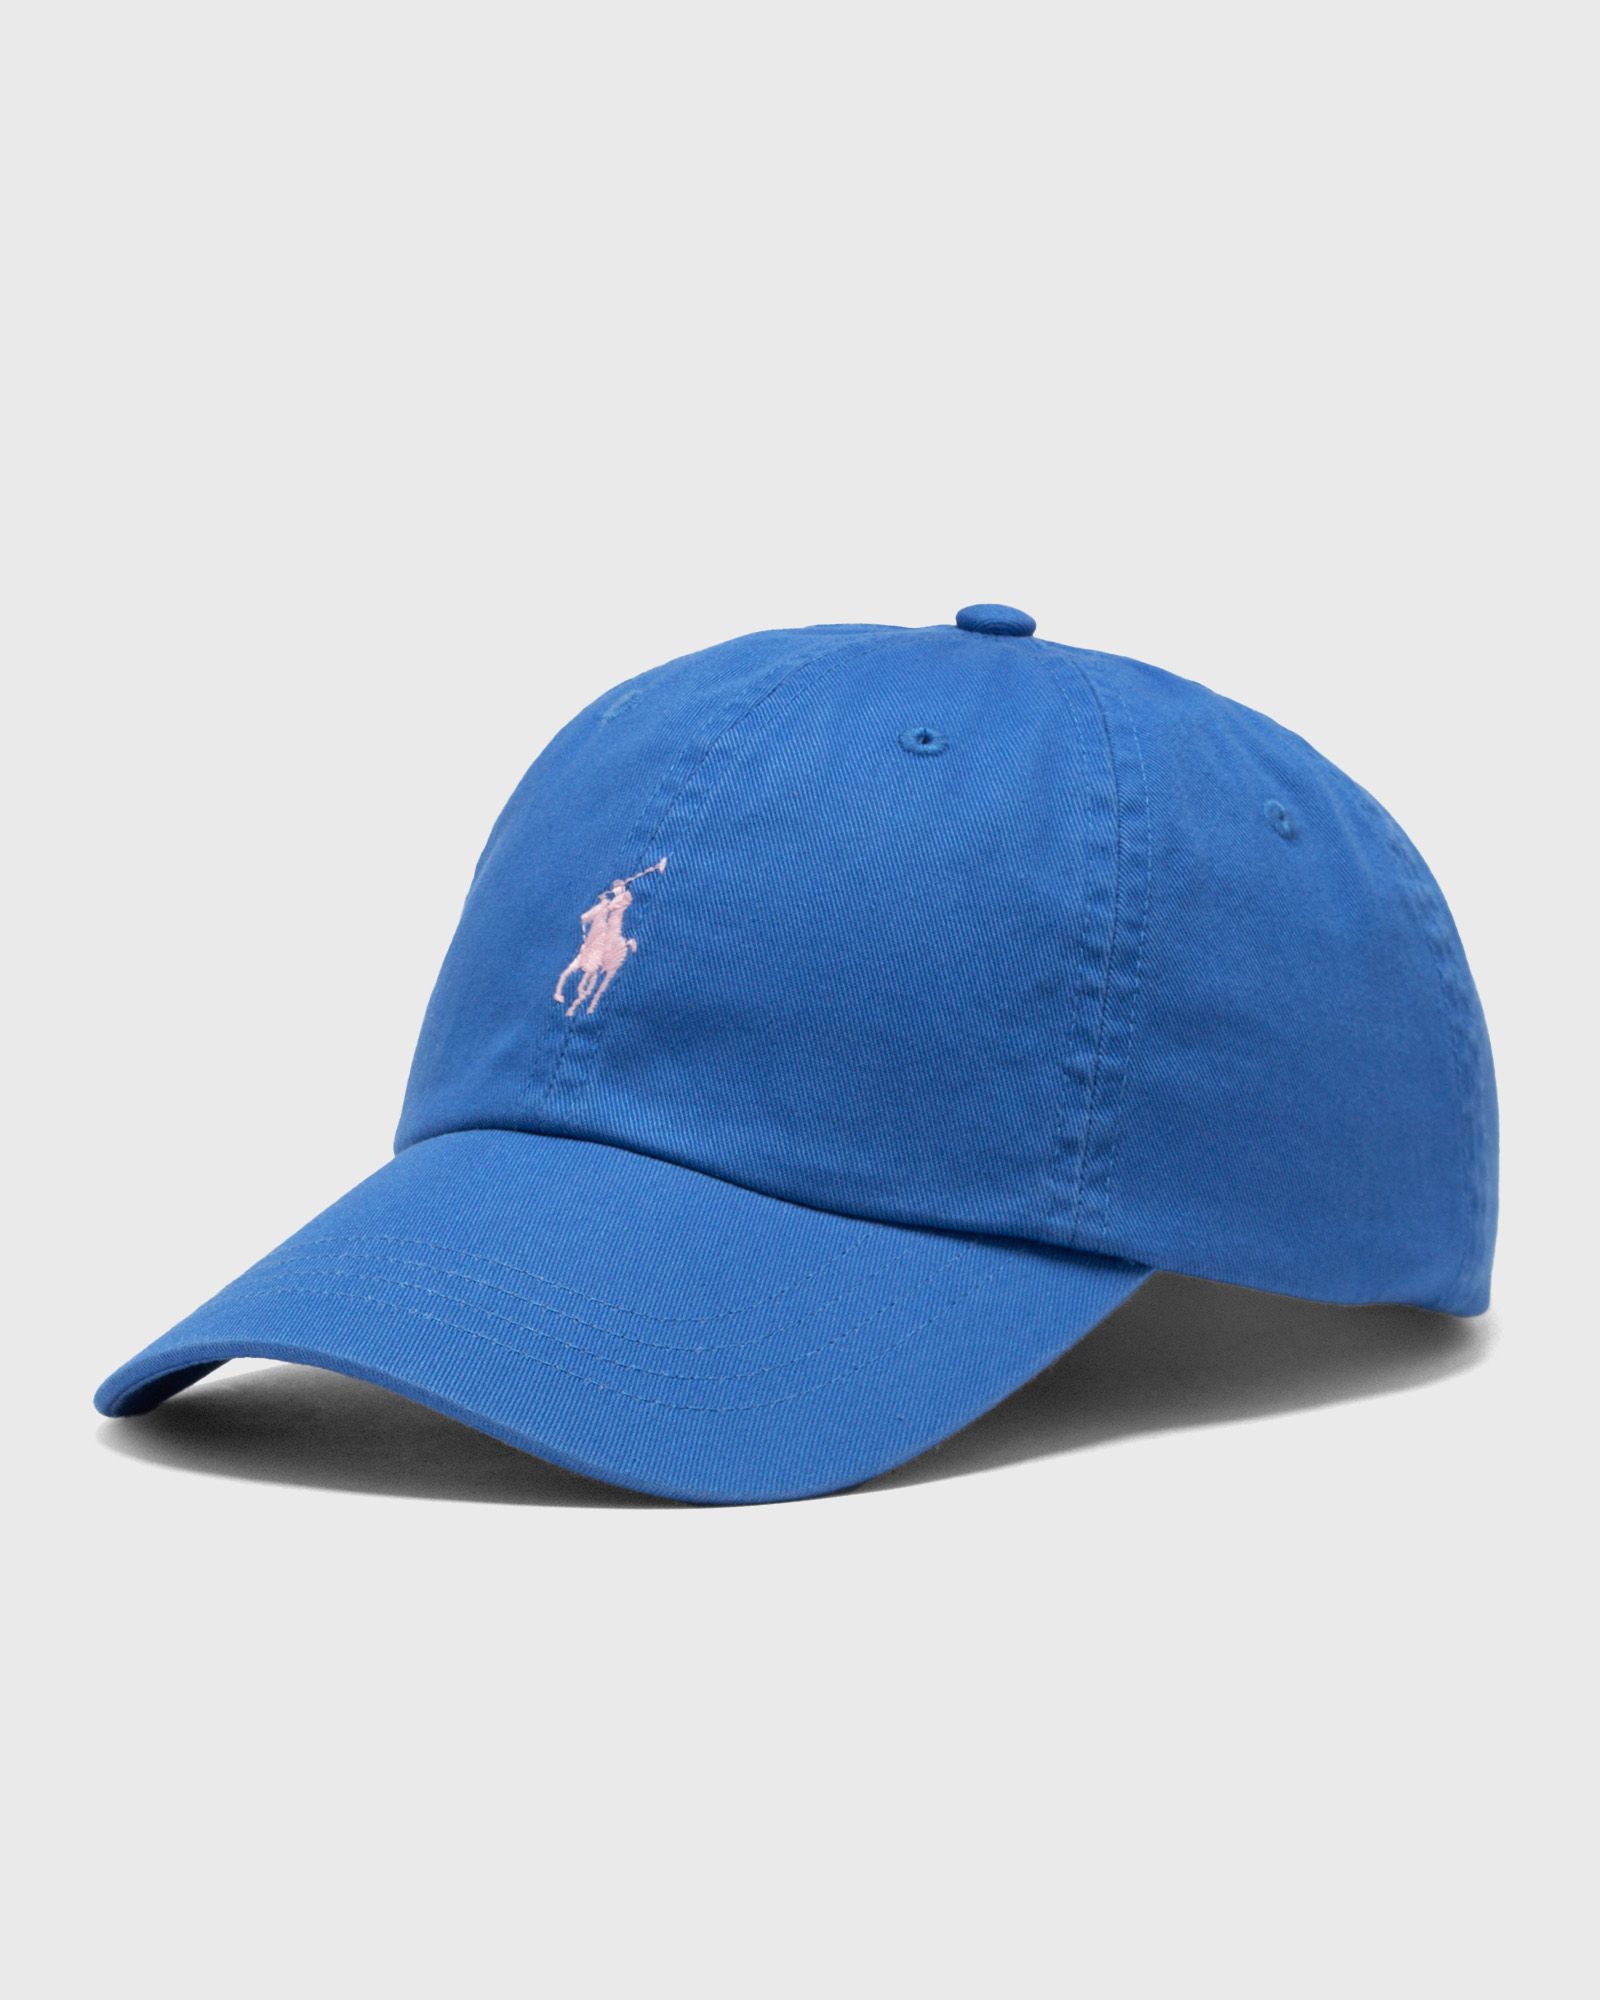 Polo Ralph Lauren - cls sprt cap-hat men caps blue in größe:one size